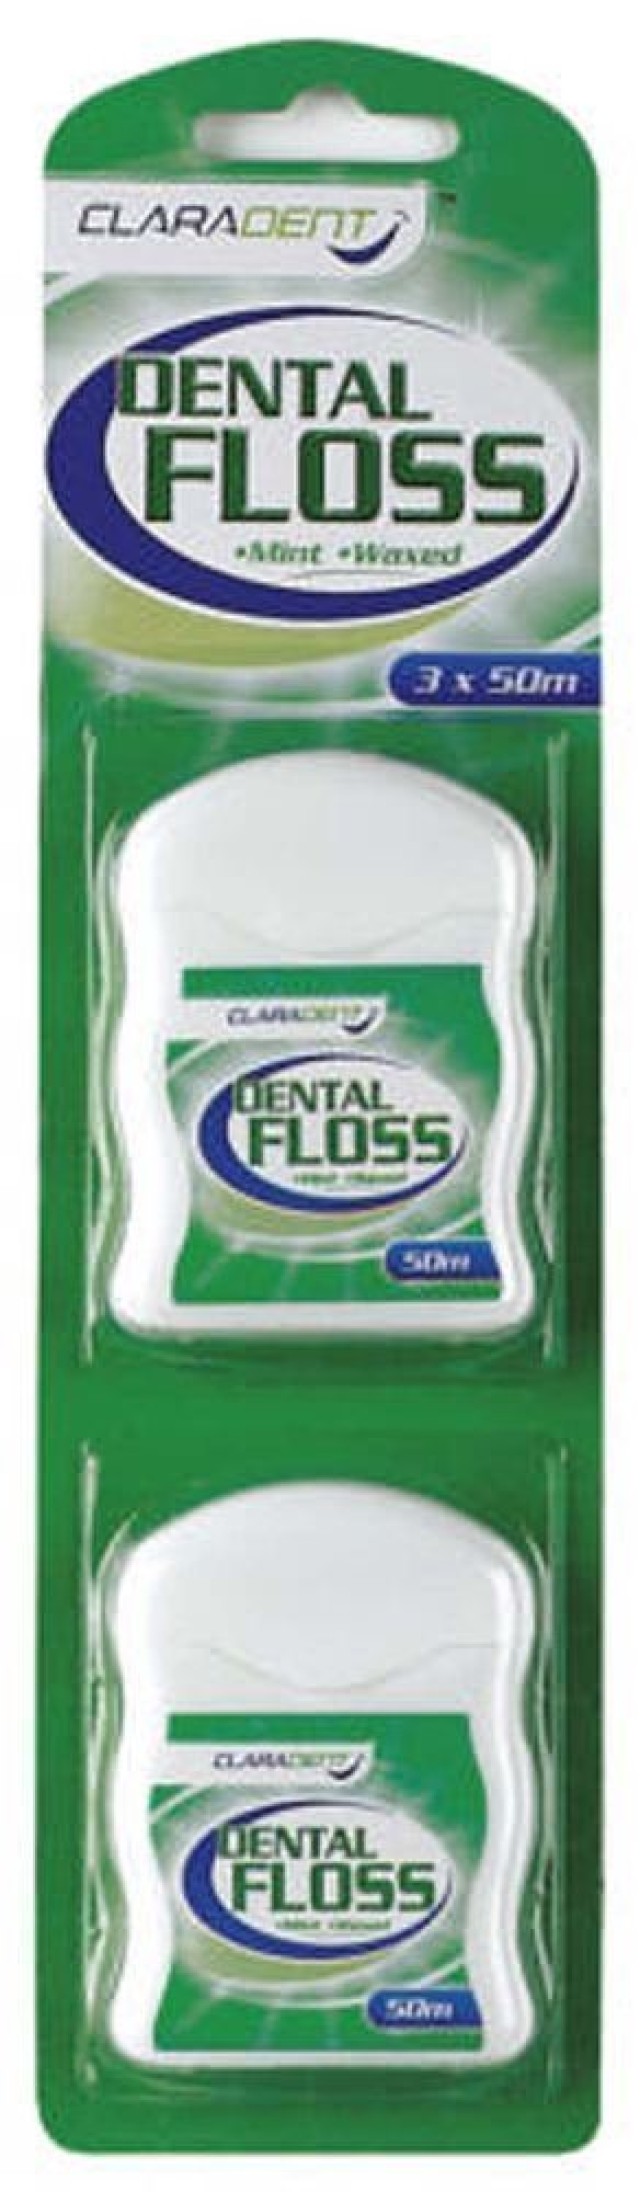 Claradent Dental Floss 50m x 2 Pack